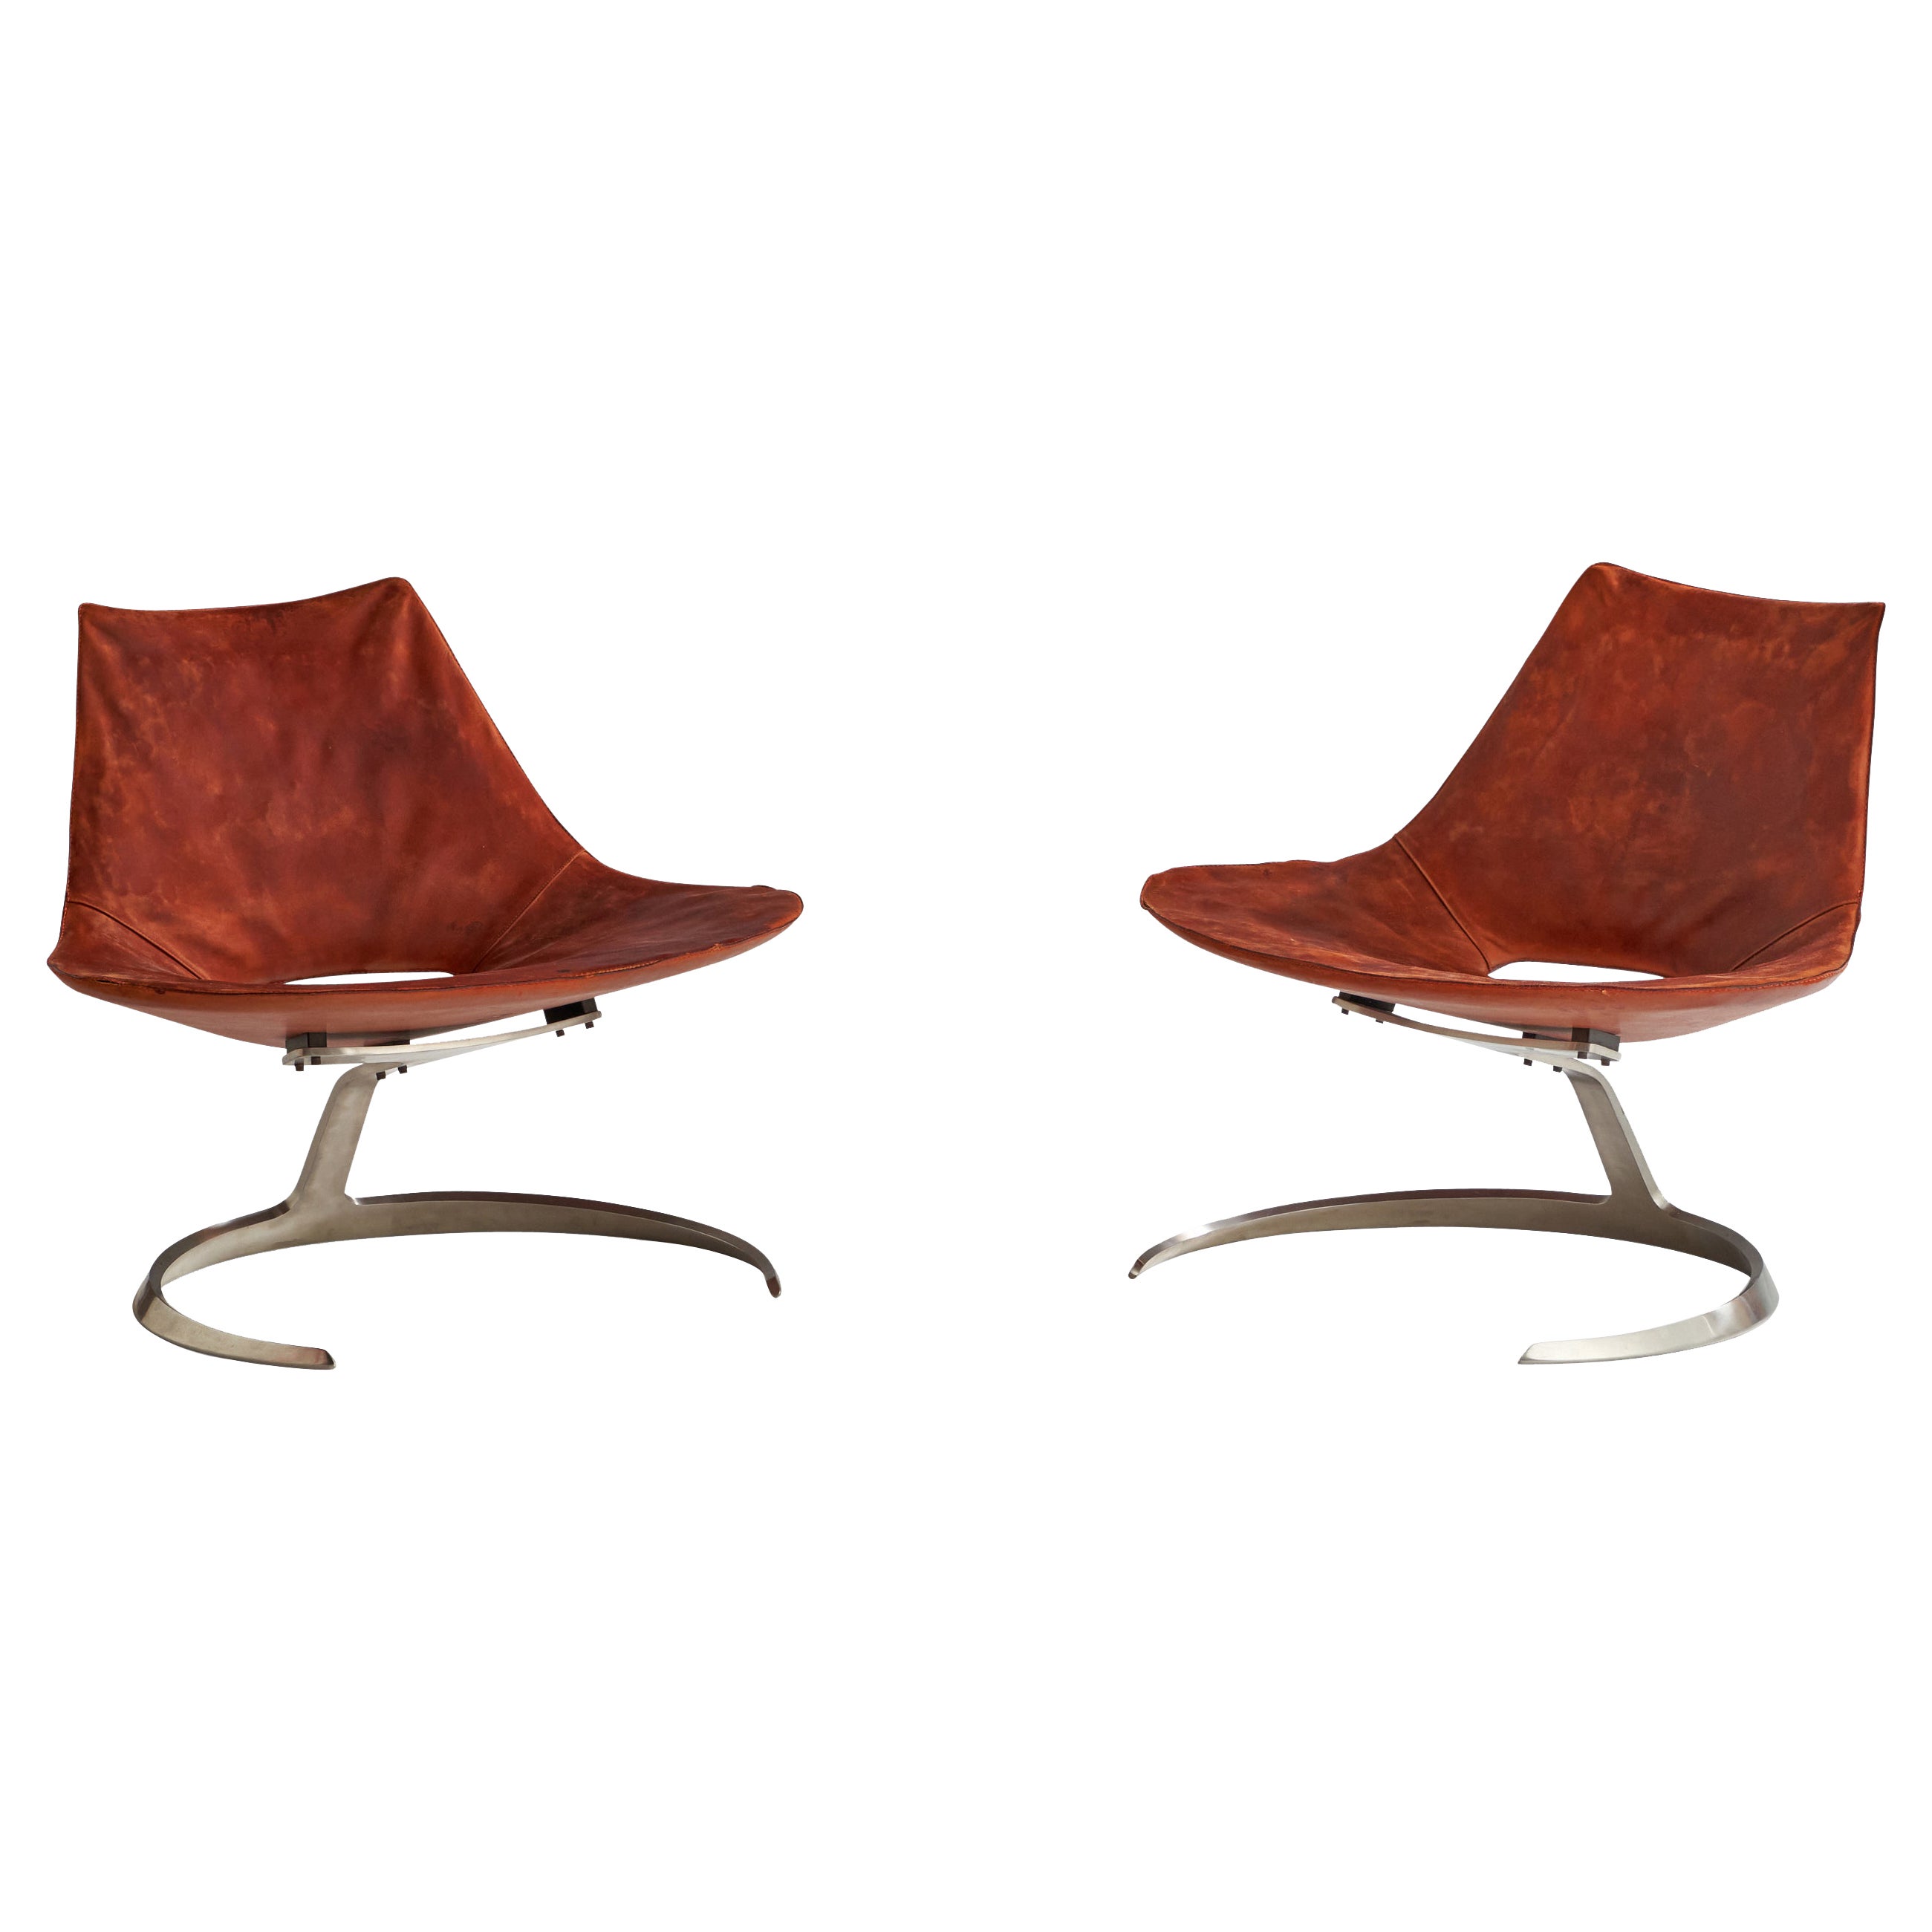 Jørgen Kastholm & Preben Fabricius, Lounge Chairs, Leather, Steel, Denmark, 1960 For Sale